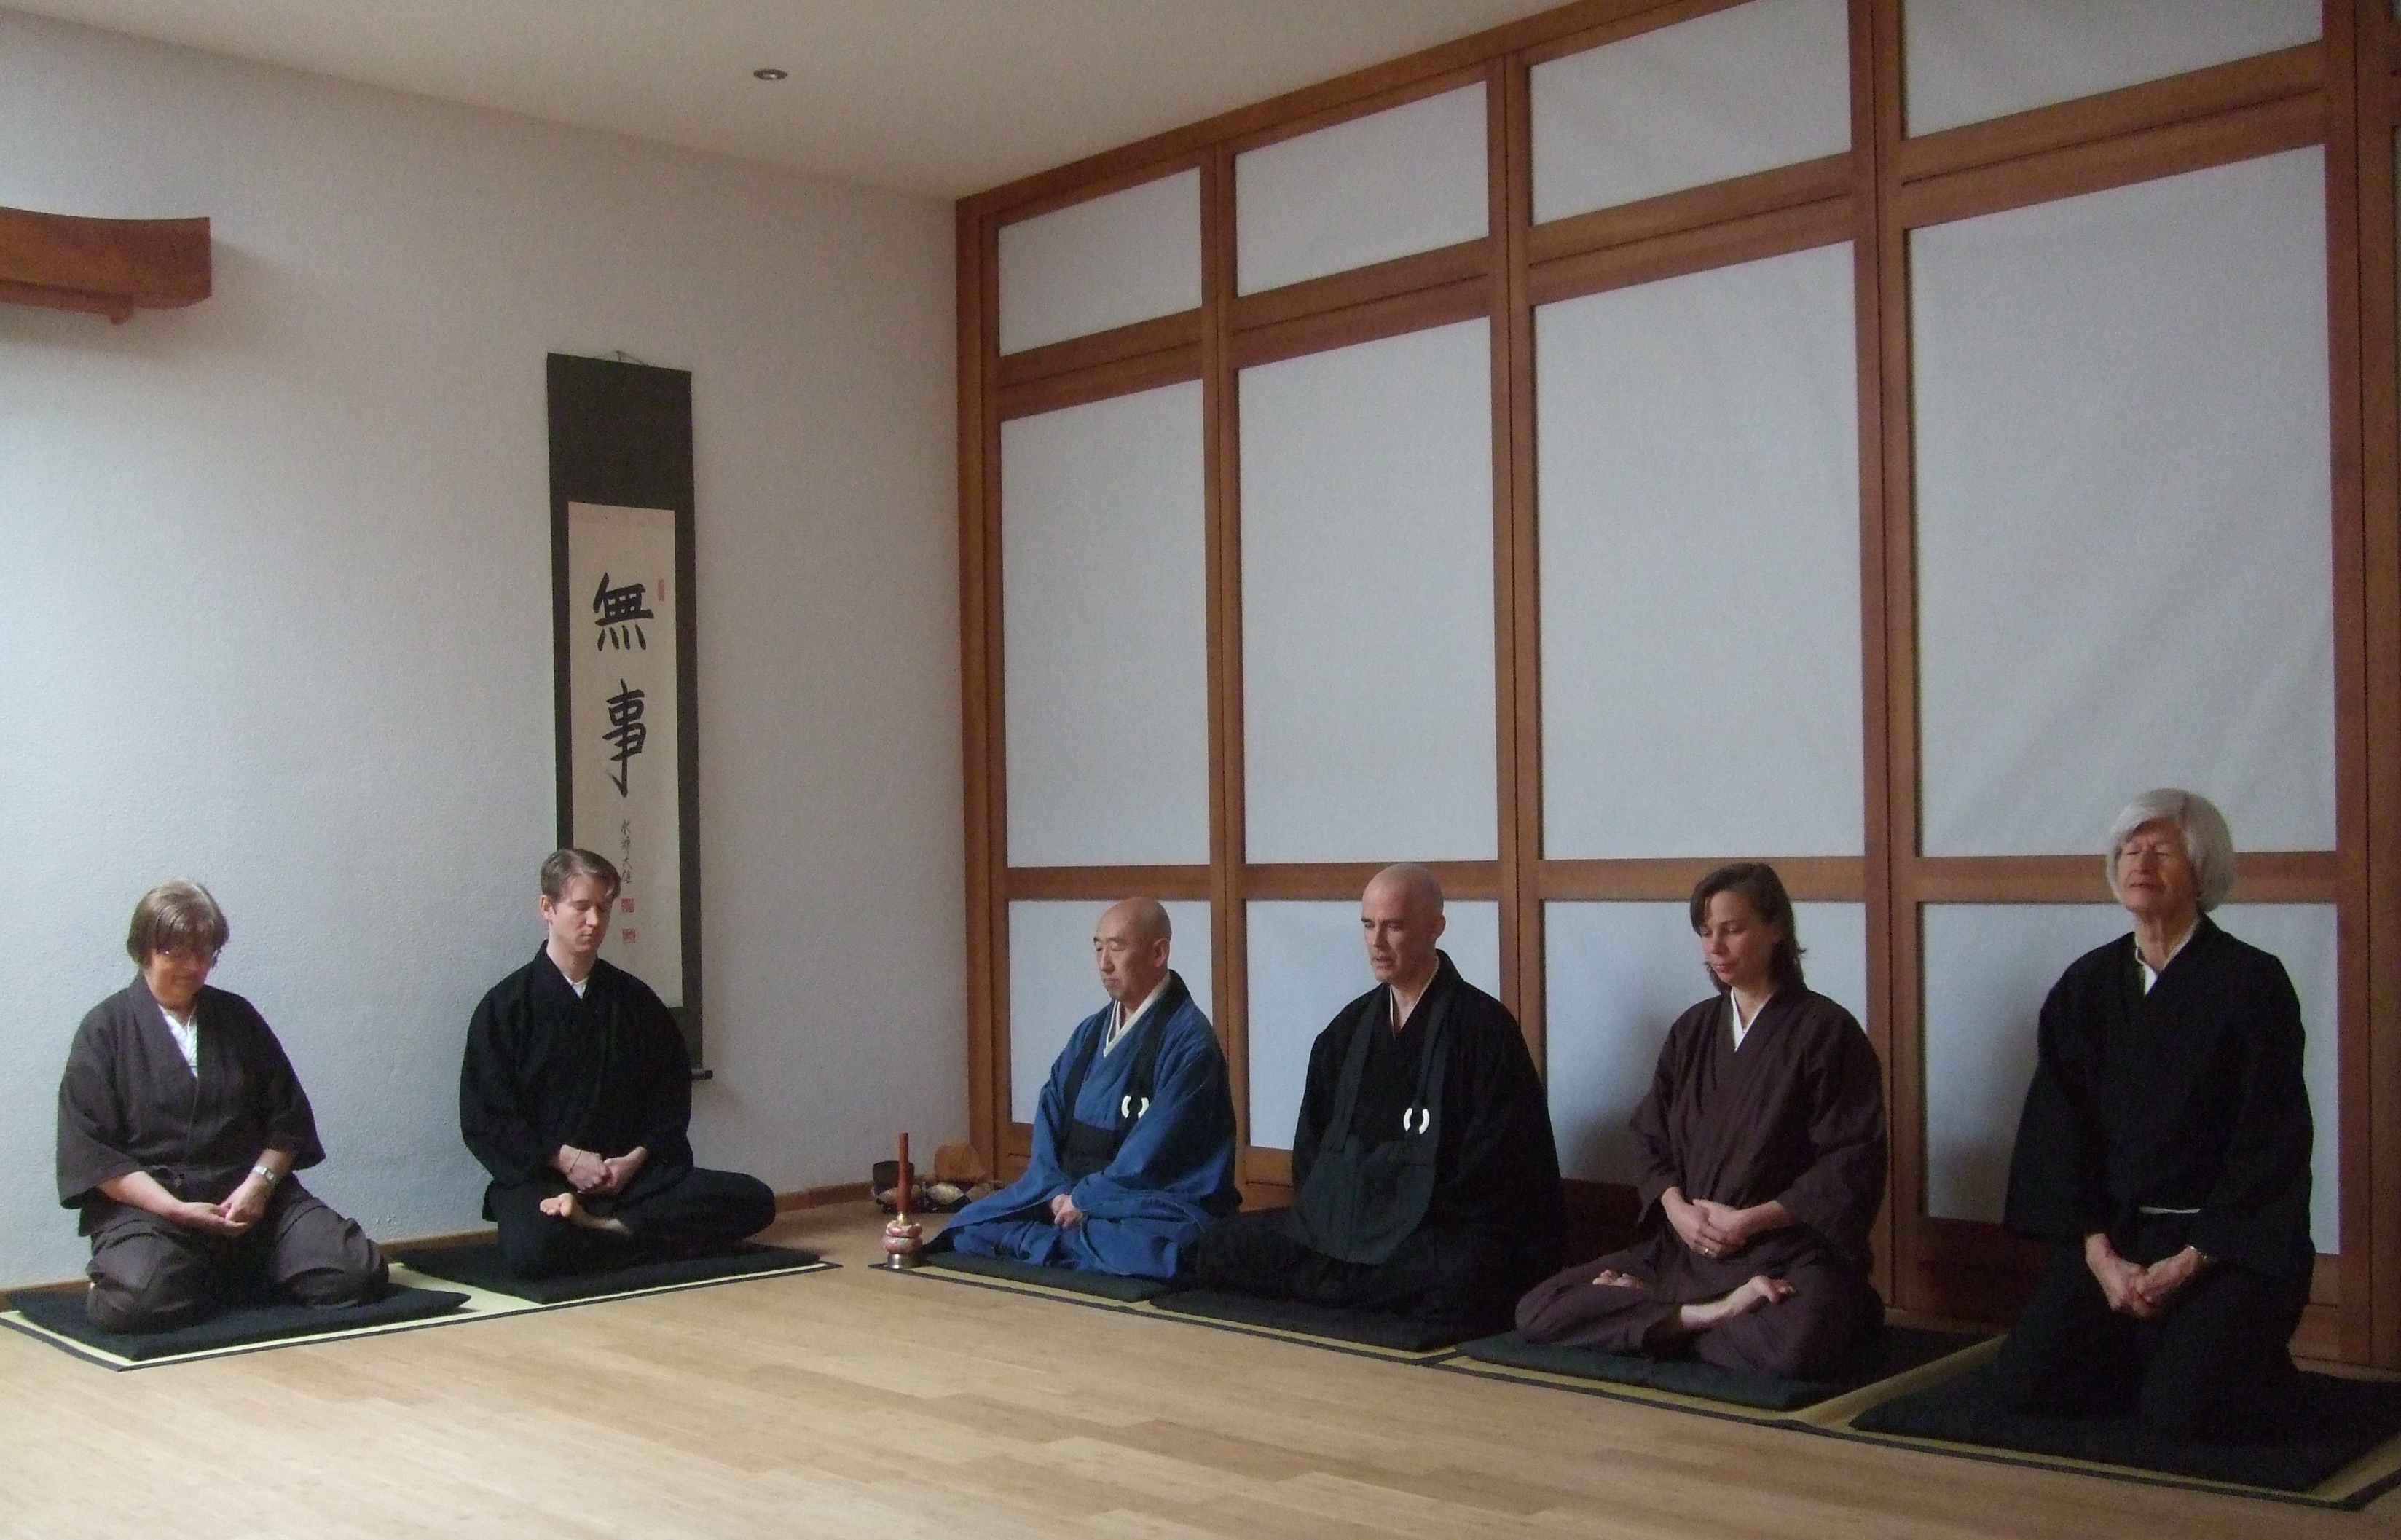 Zen-Meditation